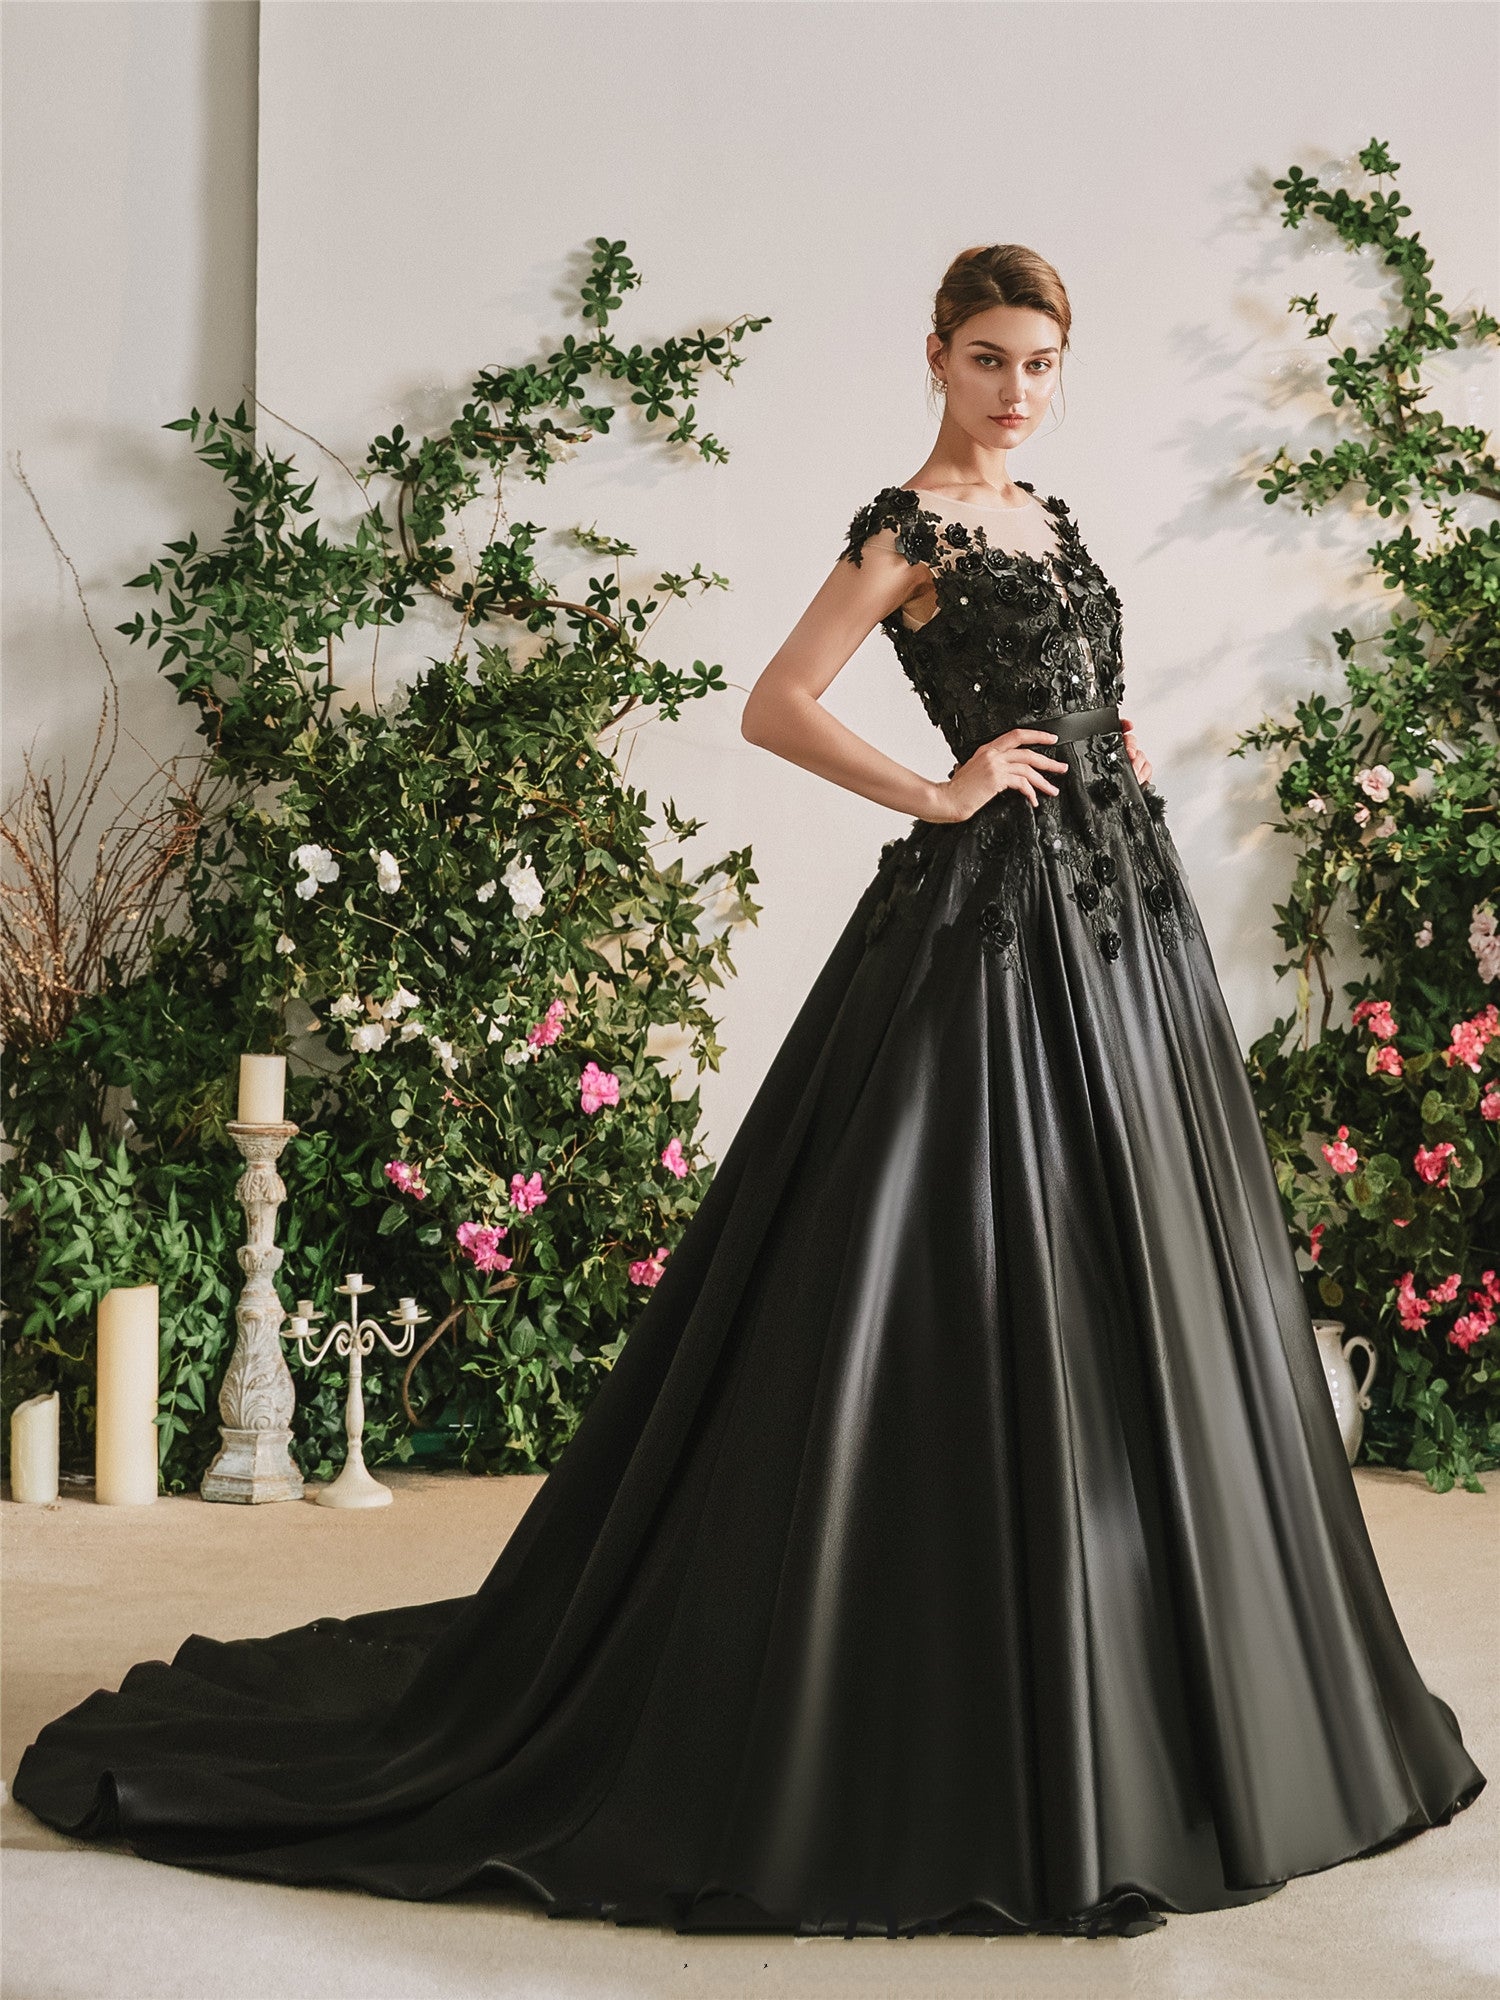 The Rare Black Rose Wedding Dress